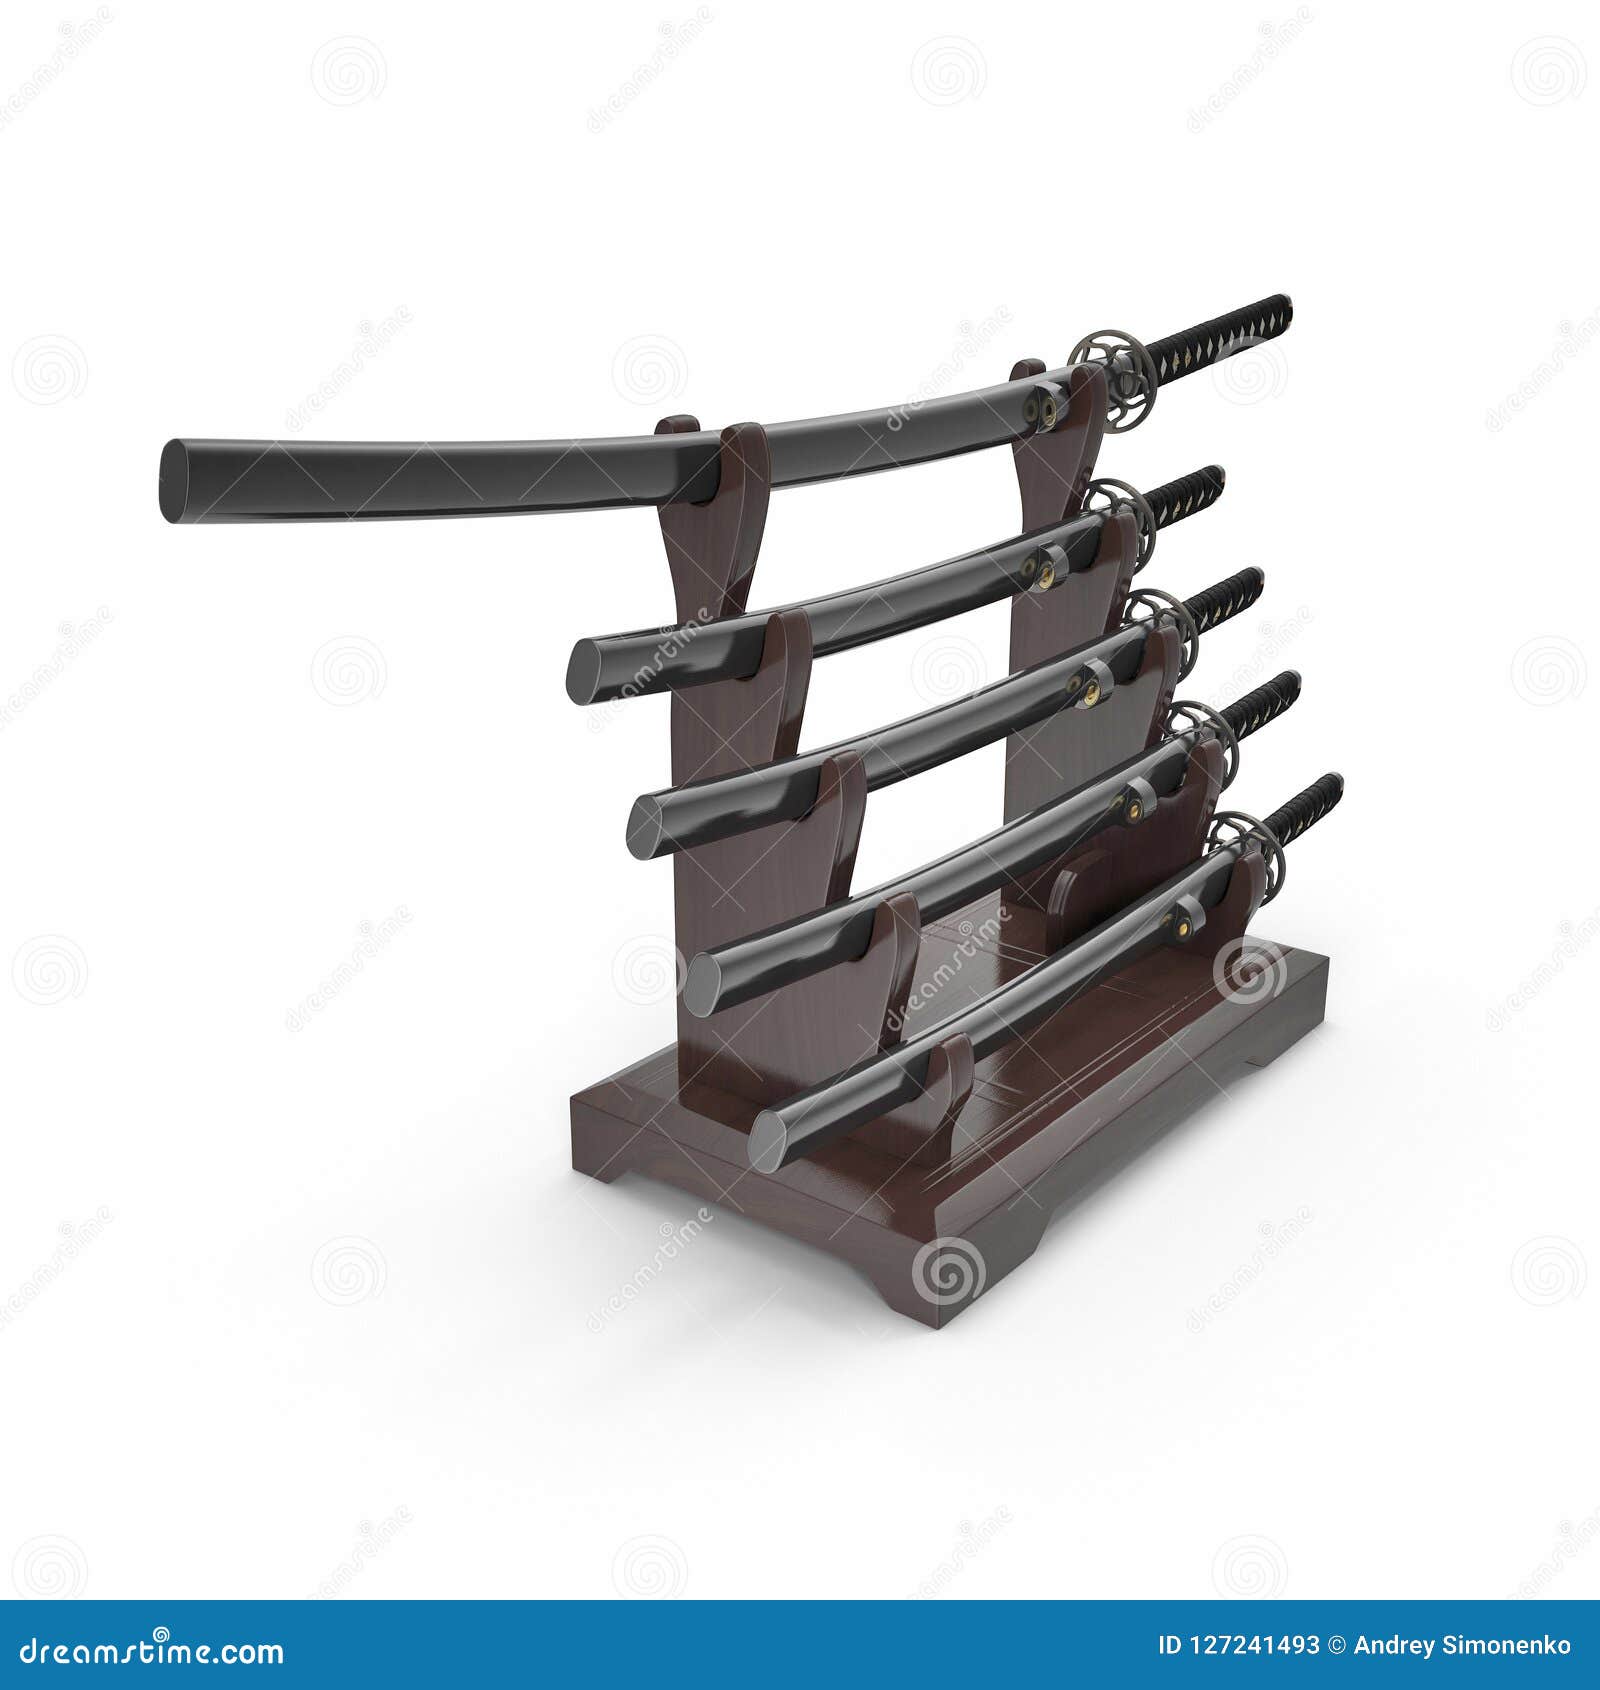 Table Top Stand "Gun Rack & Sword Display" for 1 Gun & 1 Katana Samurai Sword 